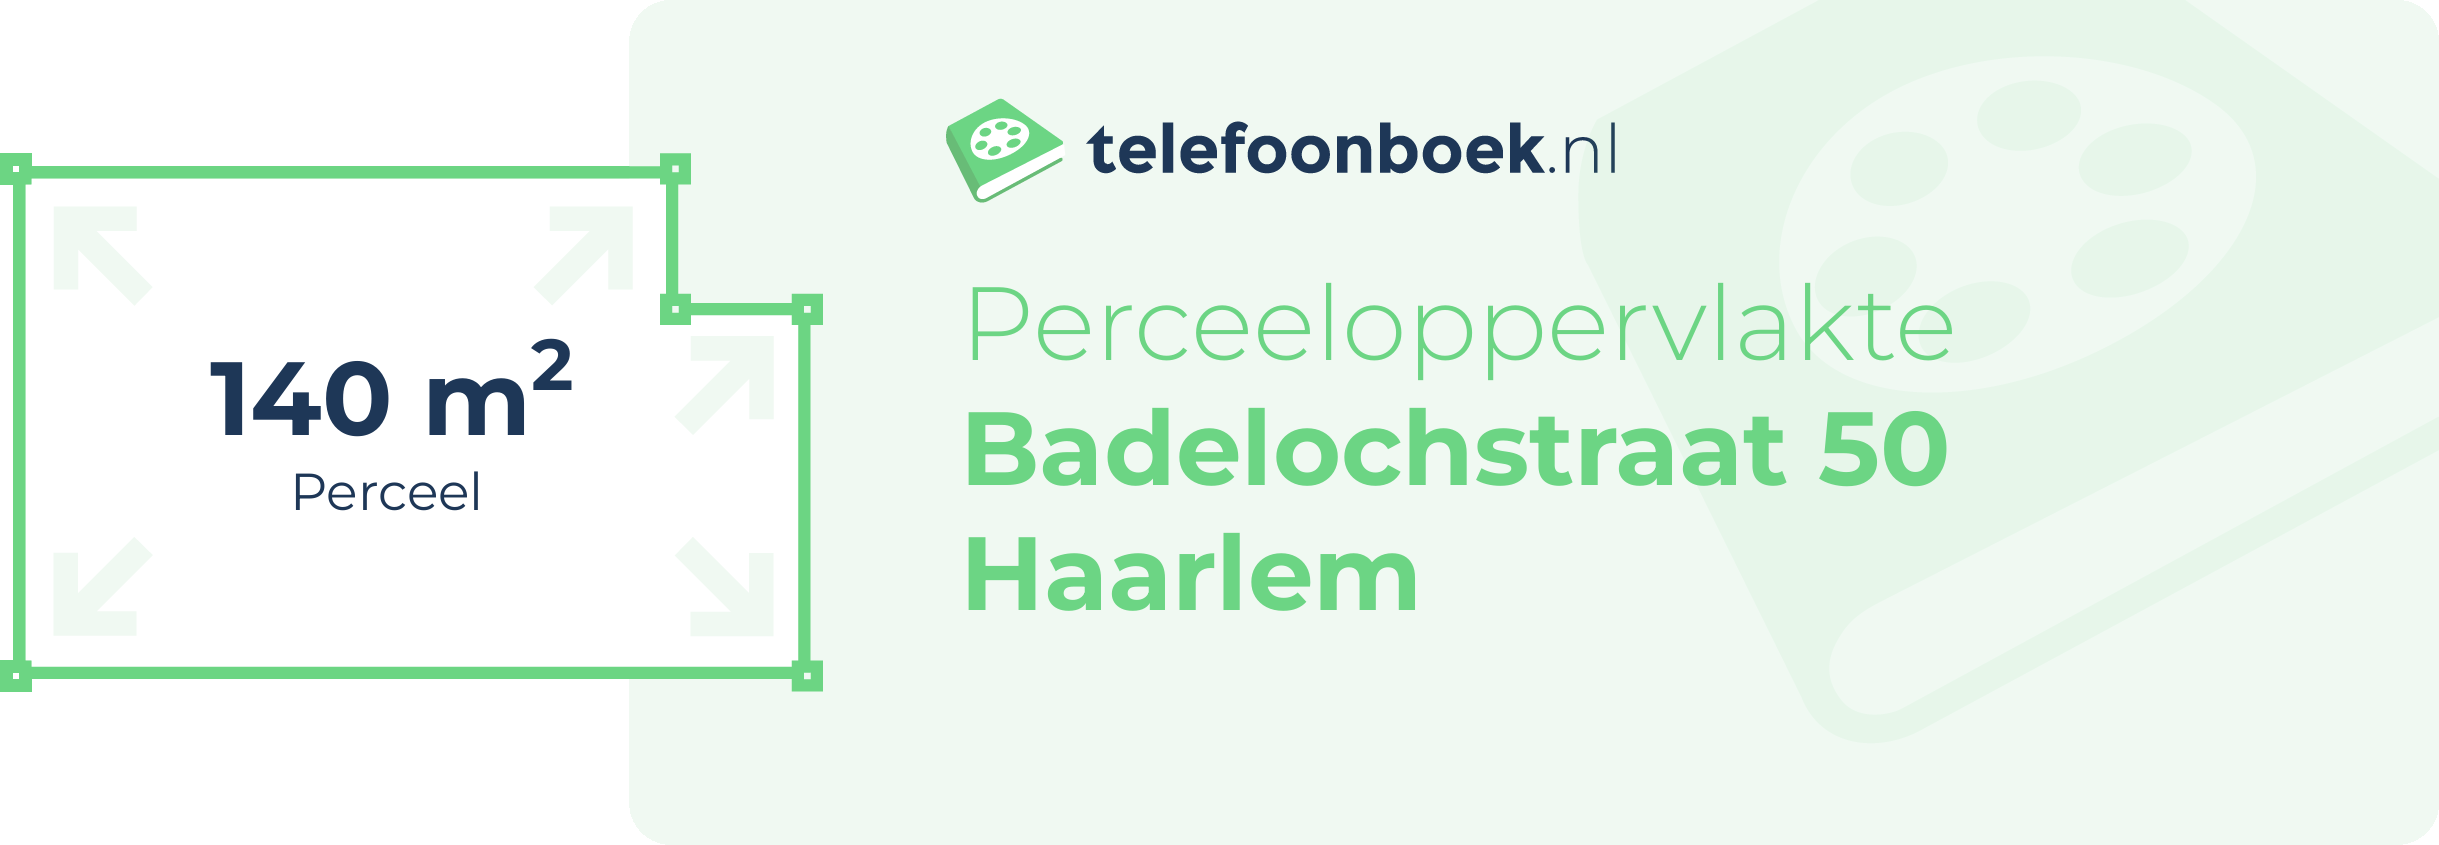 Perceeloppervlakte Badelochstraat 50 Haarlem